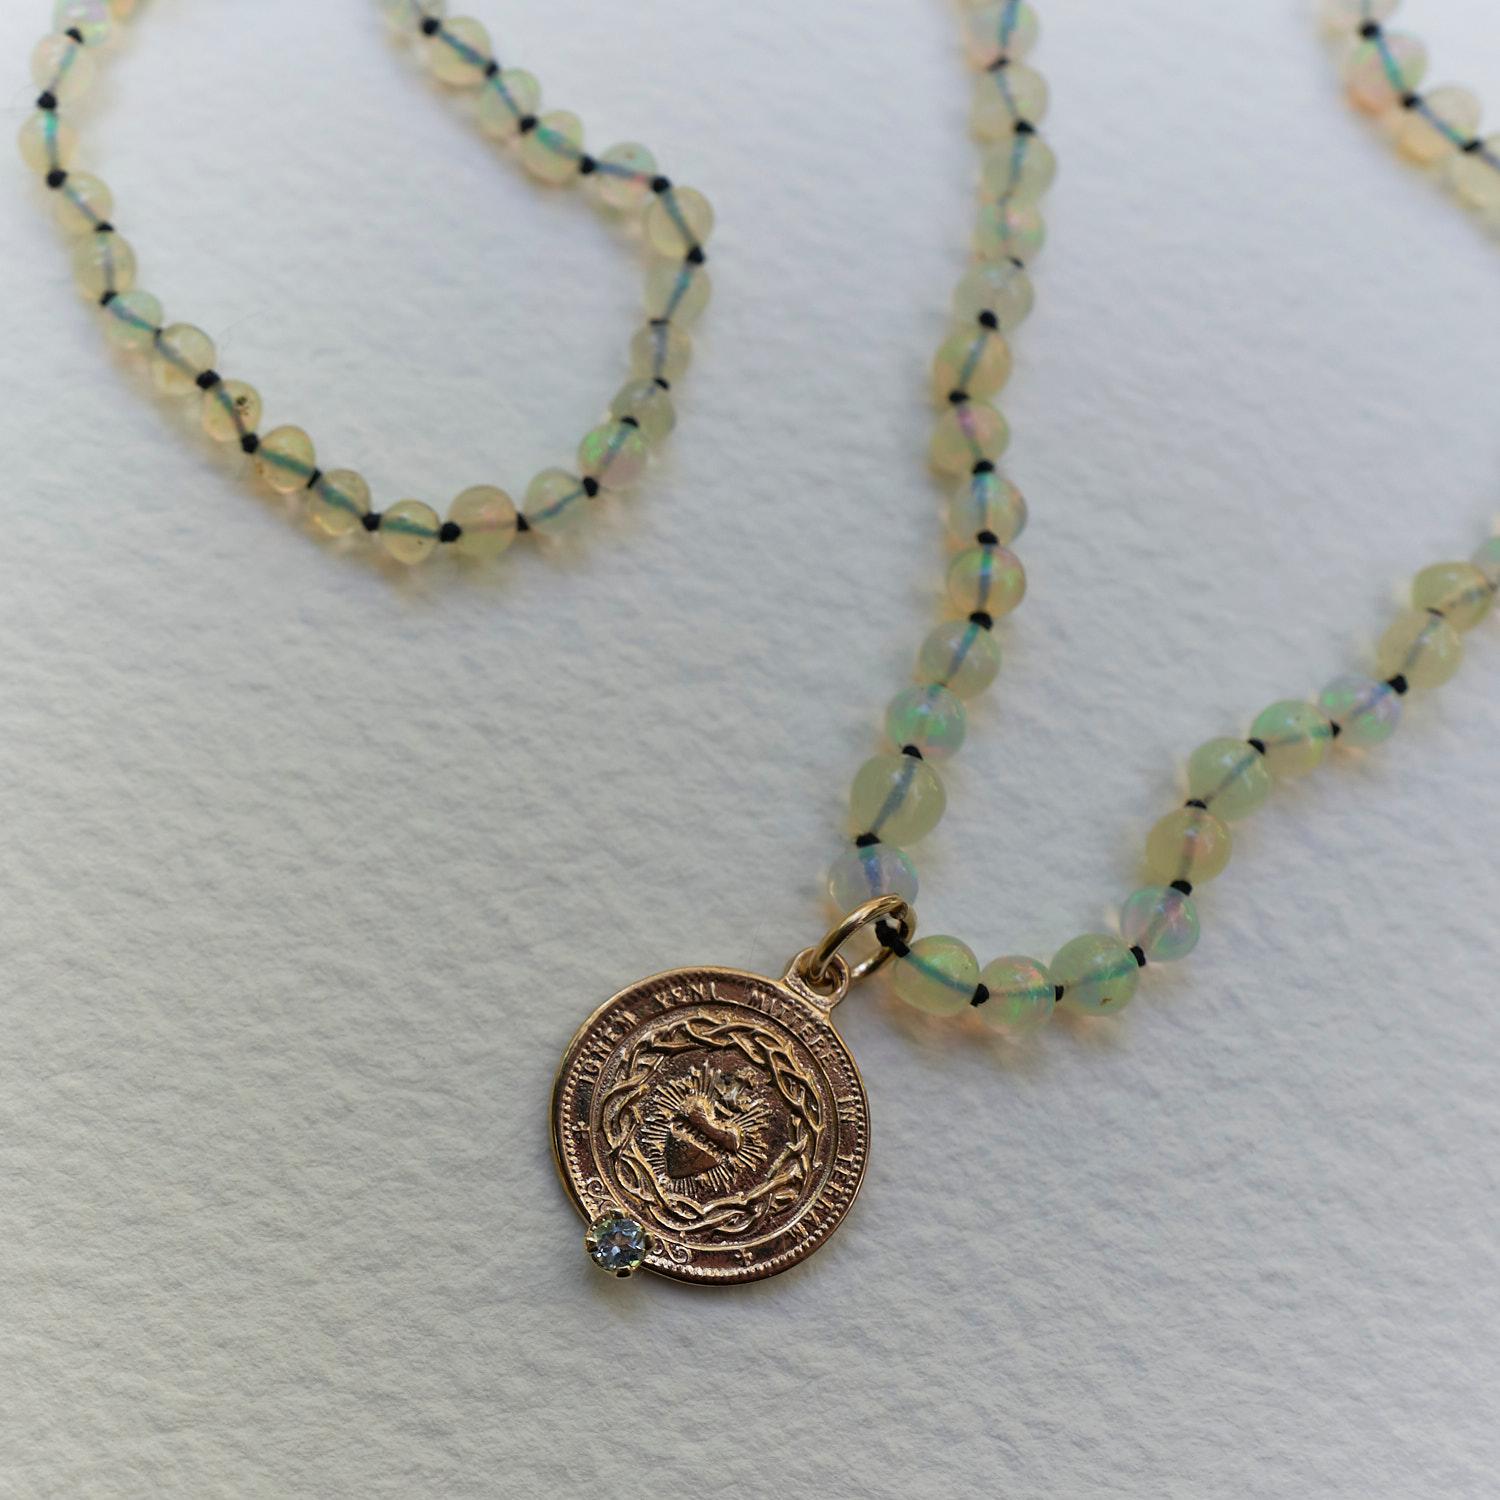 Egyptian Opal Aquamarine Choker Necklace Medal Heart Bronze J Dauphin

16